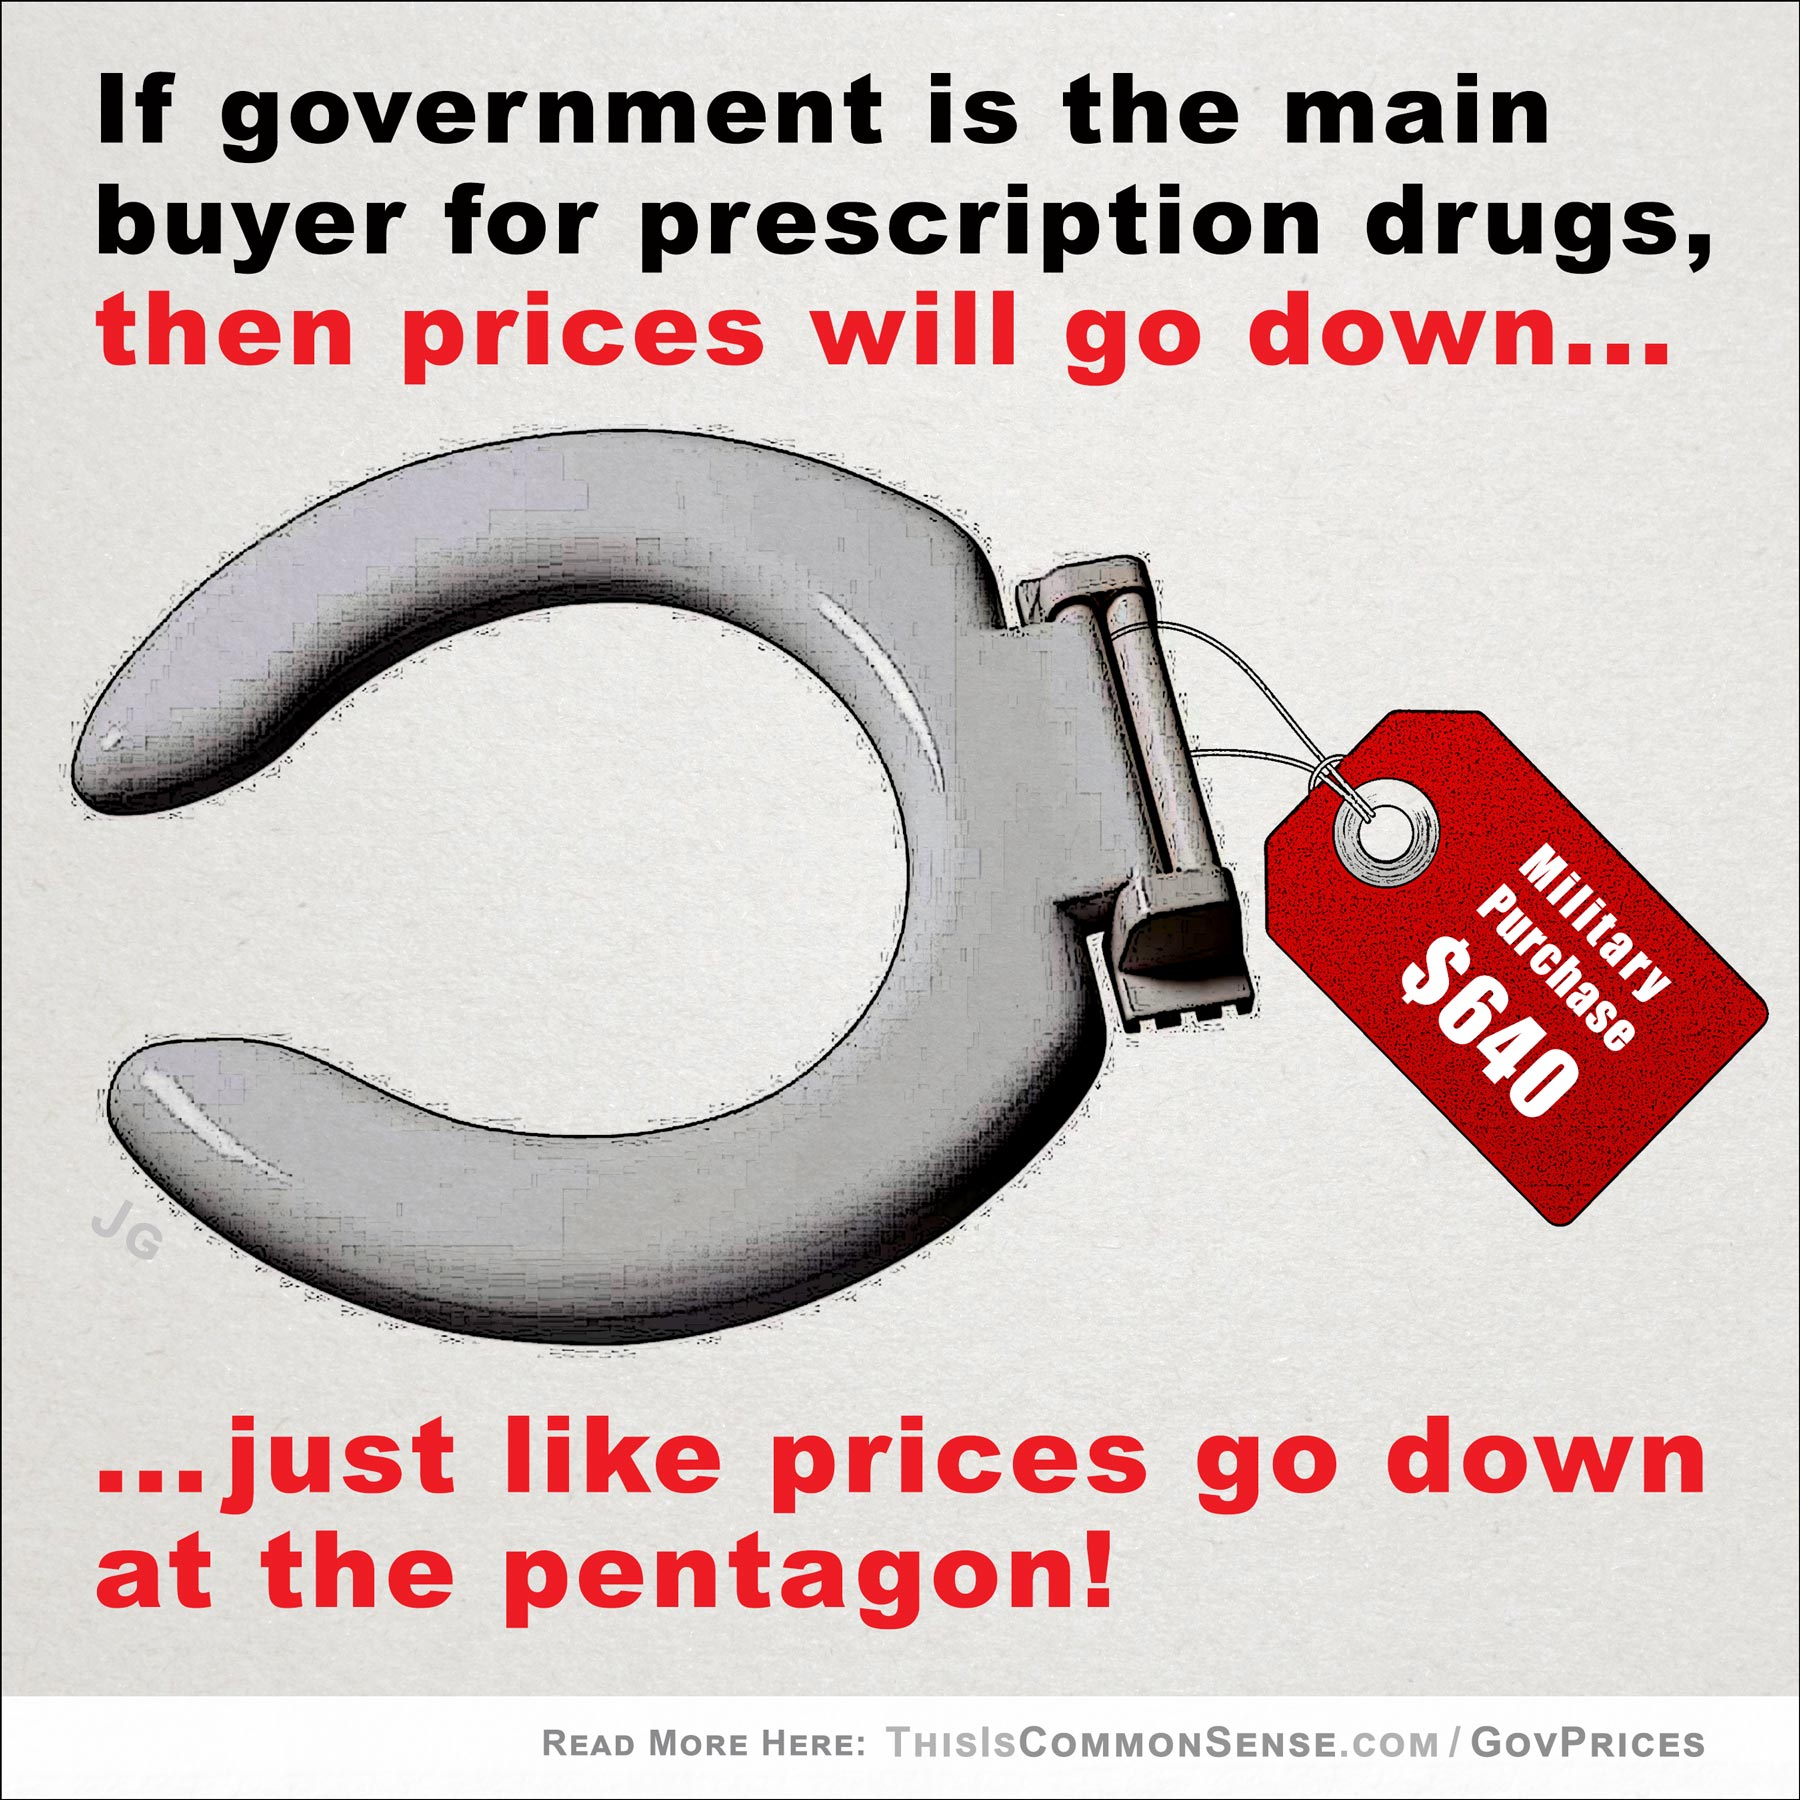 government efficiency, military spending, drug prices, subscription drugs, monopsony, Common Sense, meme